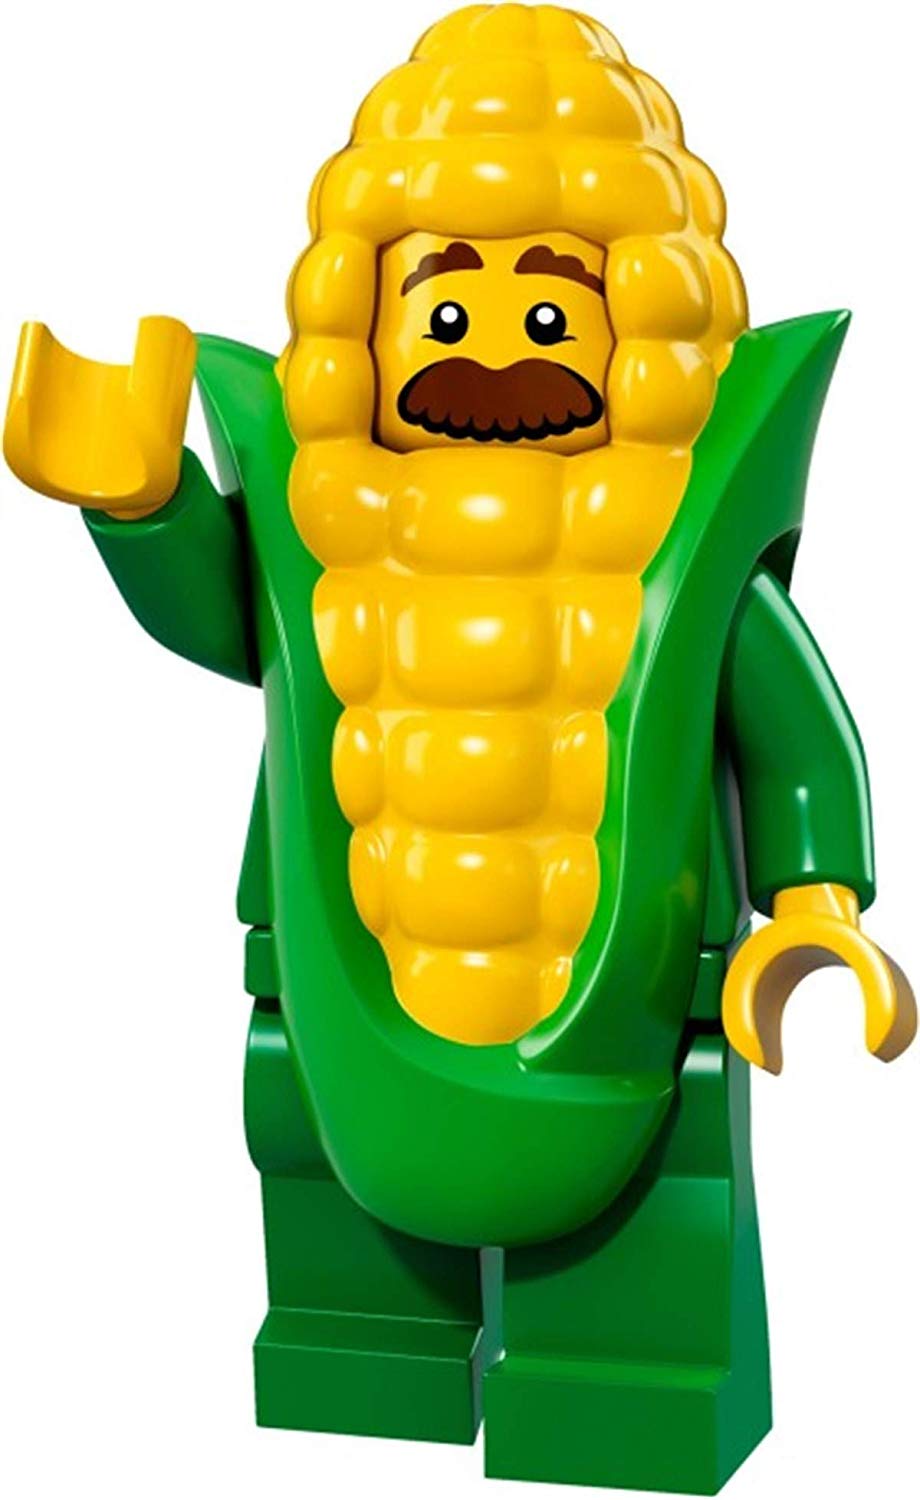 LEGO Minif igures Series 17 – # 4 Corn Cob Guy Minif igure – (Bagged) 71018